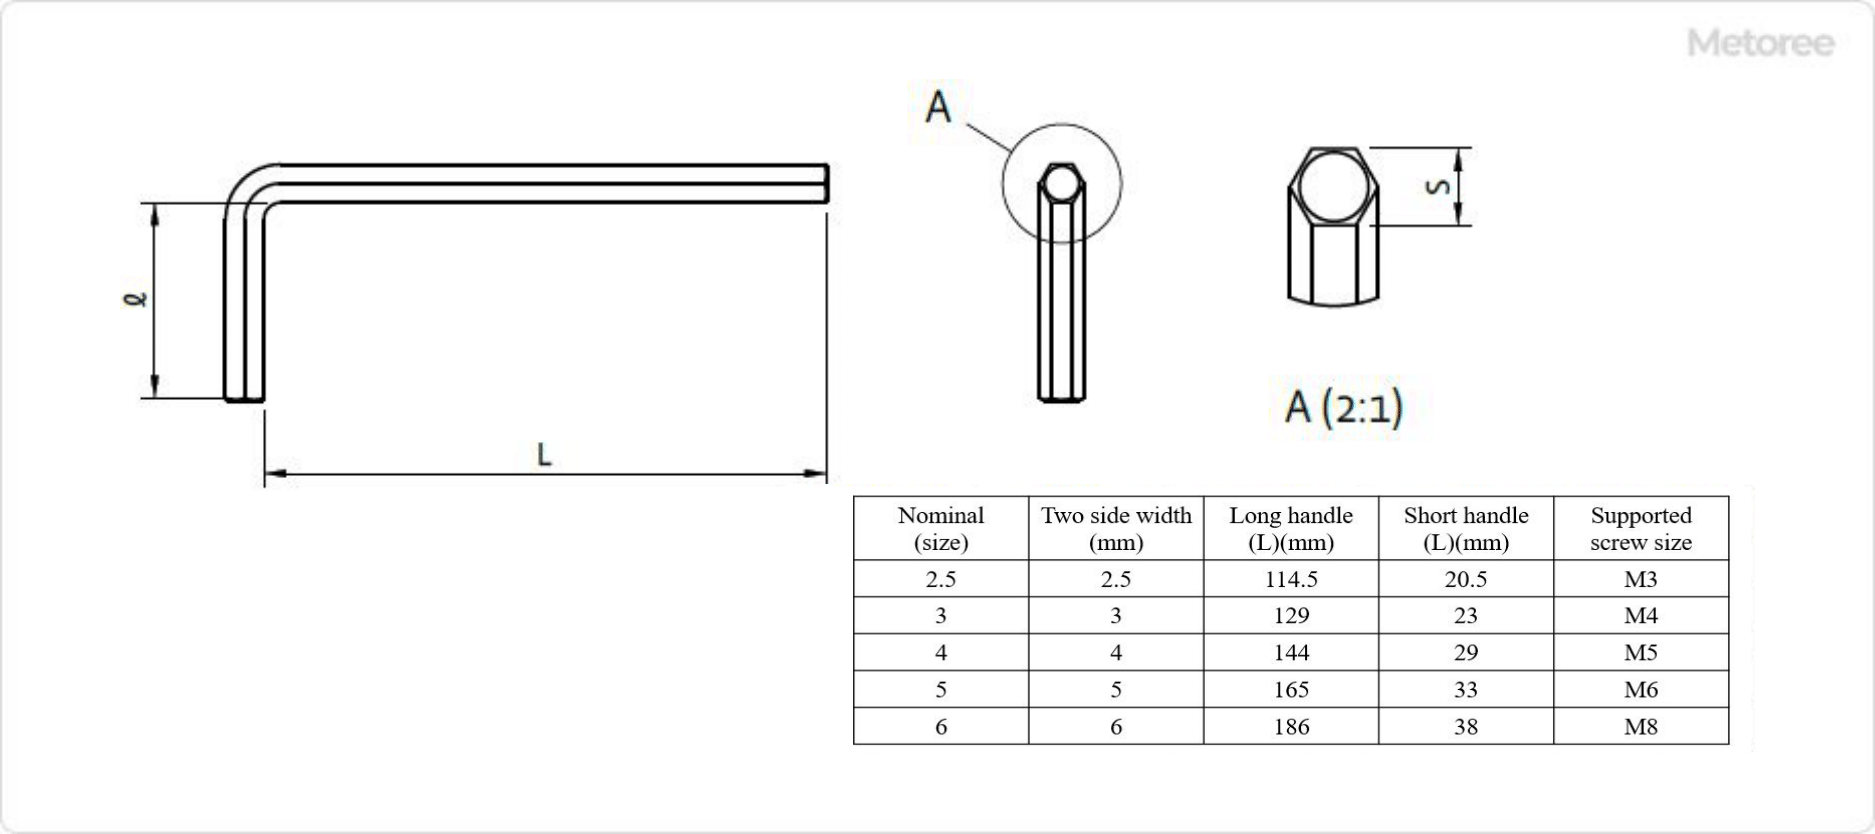 Figure 1. Example of hexagonal bar wrench sizes